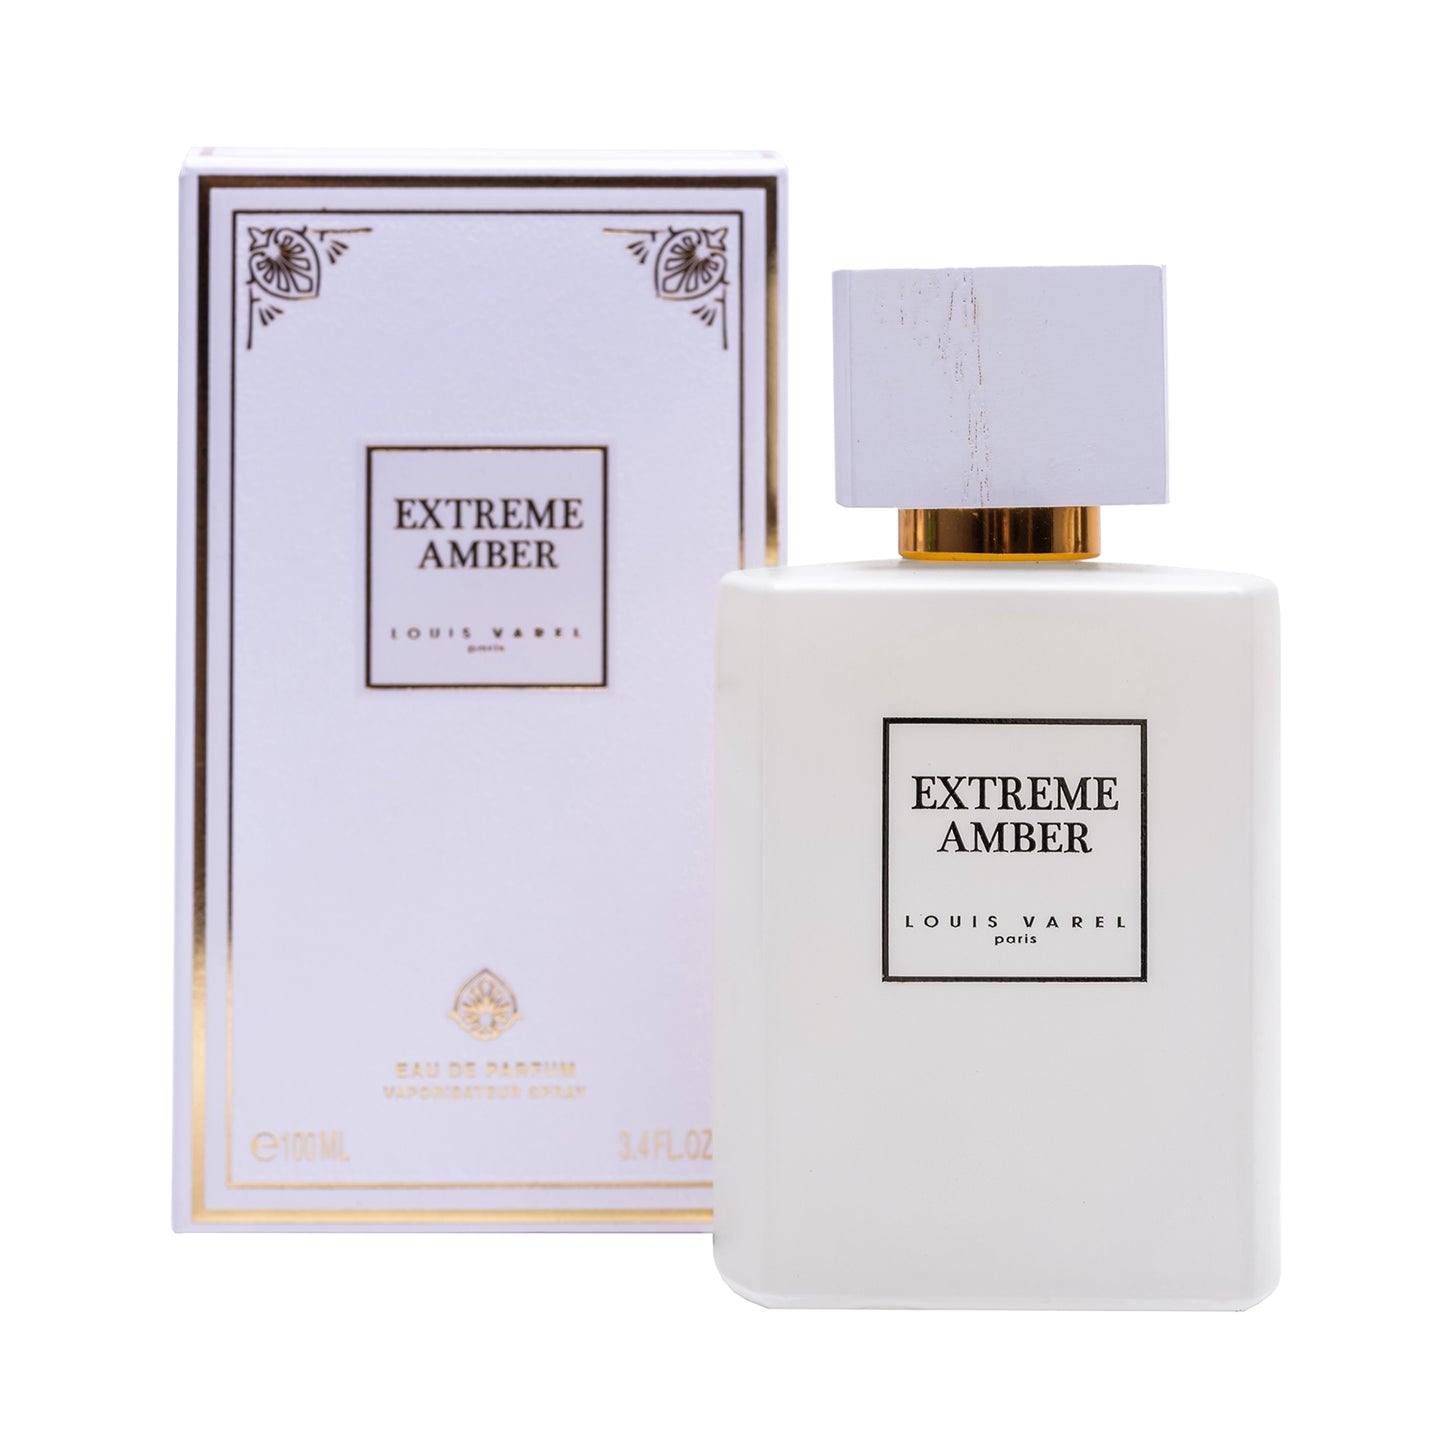 Louis Varel Extreme Amber, apa de parfum 100 ml, unisex